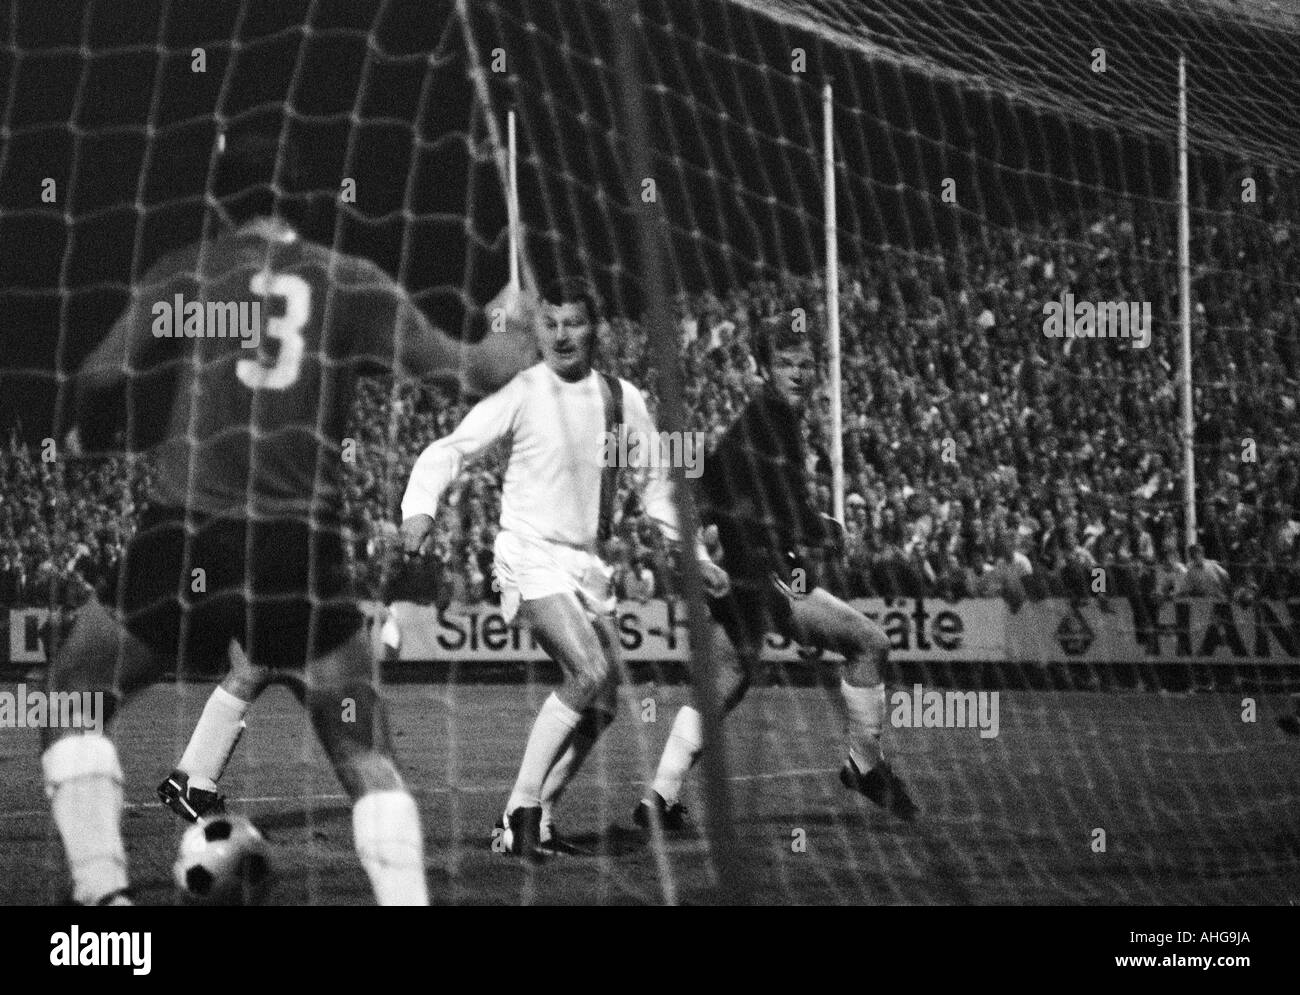 Calcio, Bundesliga, 1970/1971, Borussia Moenchengladbach versus Hannover 96 0:0, Boekelberg Stadium, scena del match, f.l.t.r. Klaus Bohnsack (96), Ludwig Mueller (MG), il custode Horst Podlasly (96) Foto Stock